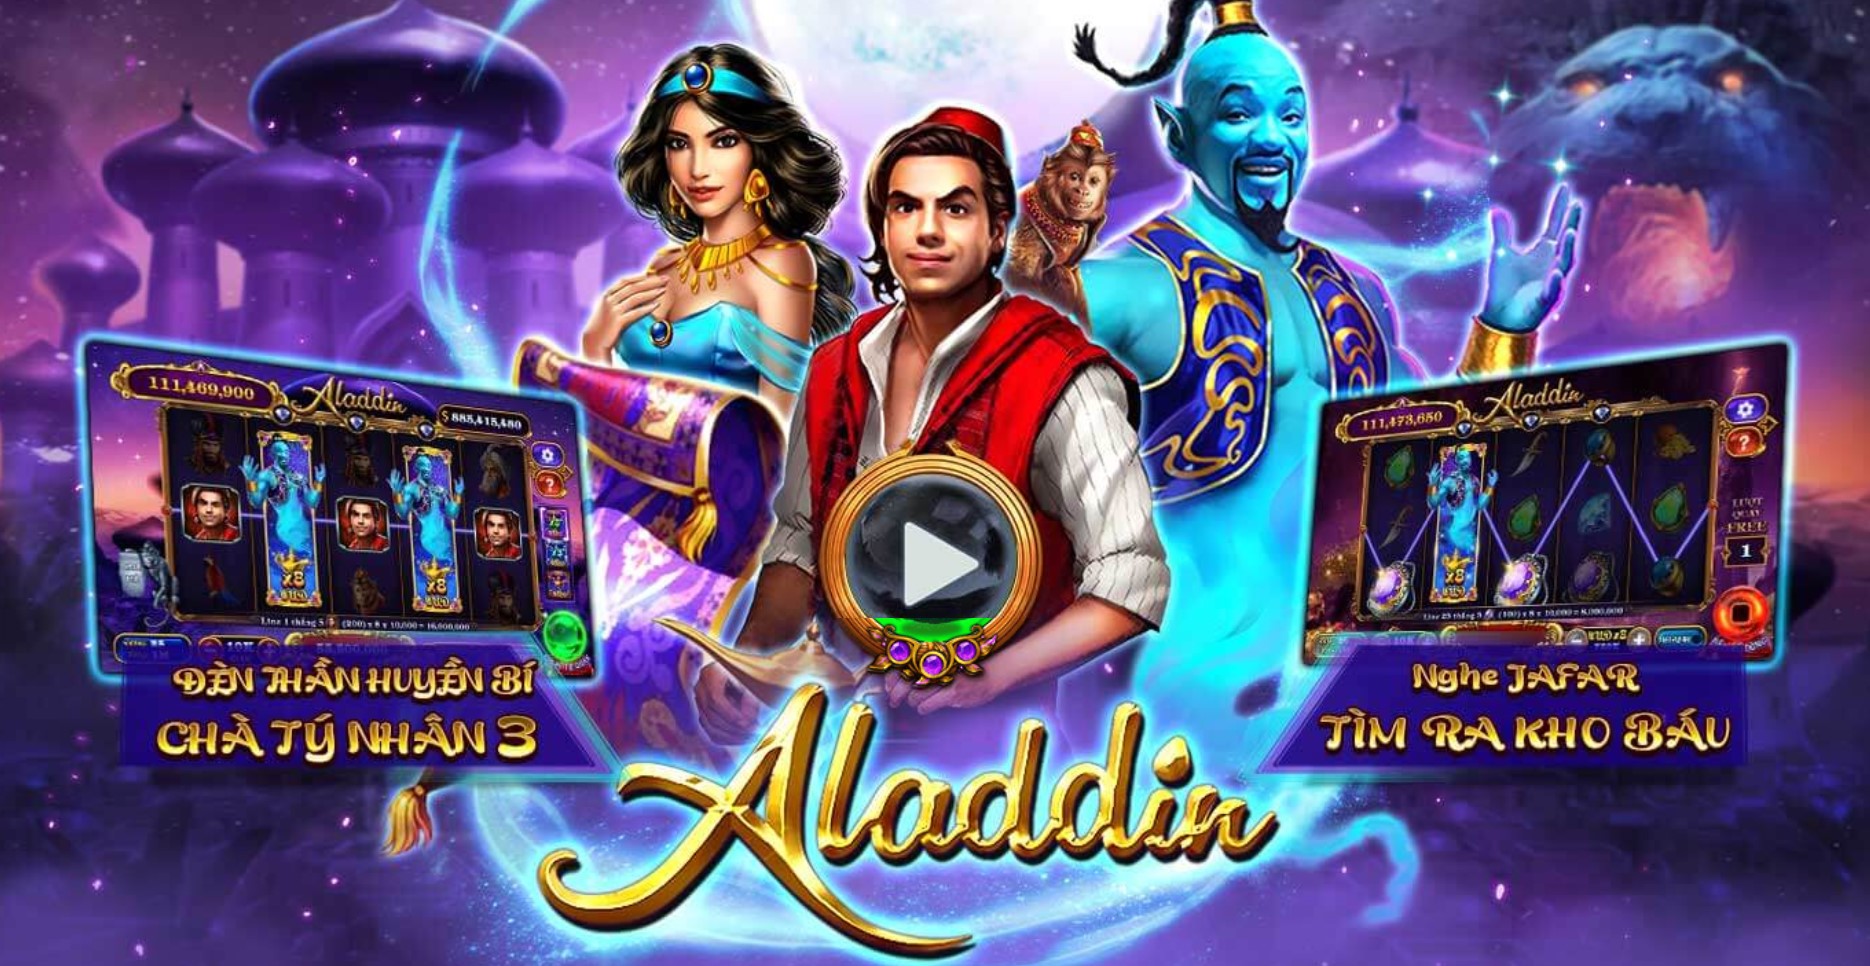 Sự hấp dẫn từ Aladdin Slot của UK88